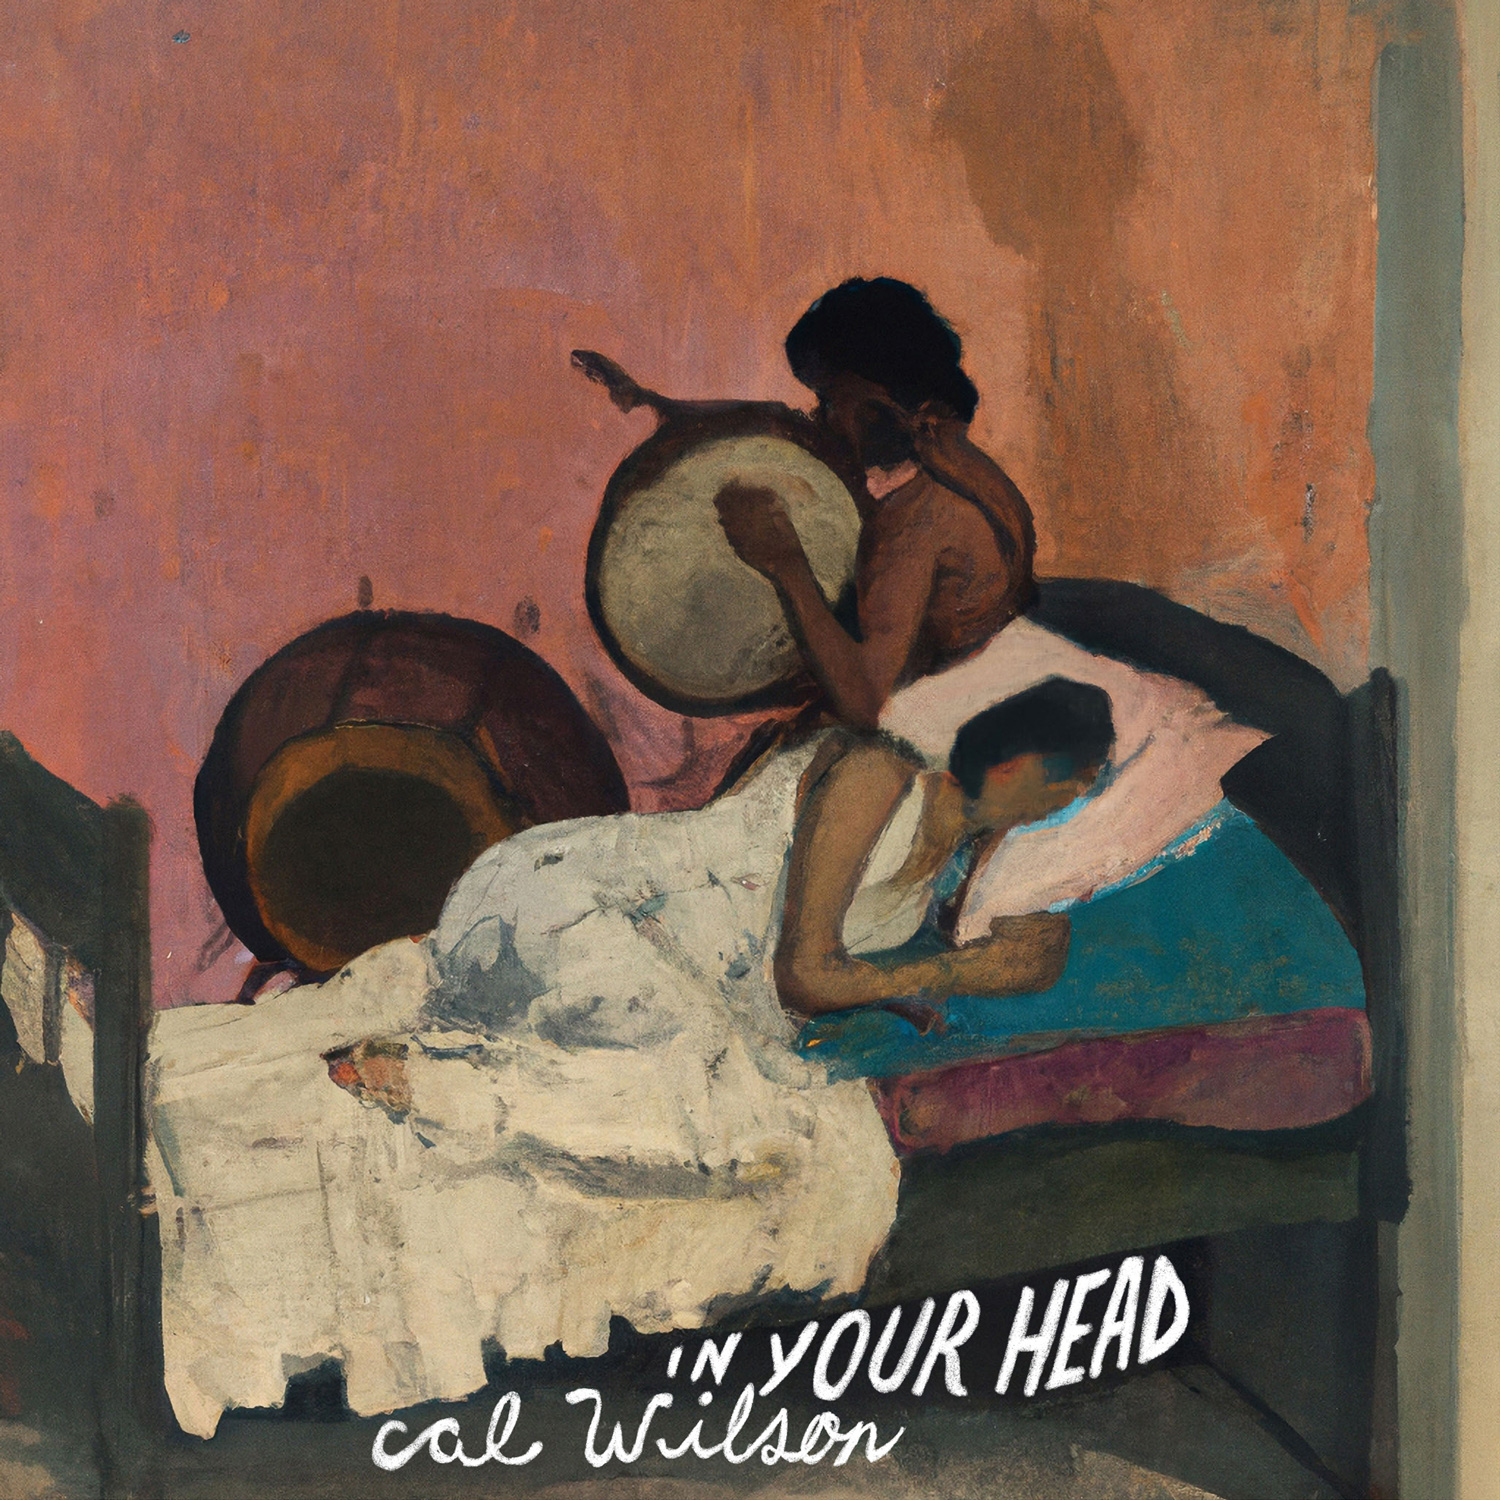 Cal Wilson ‘In Your Heard’ album artwork